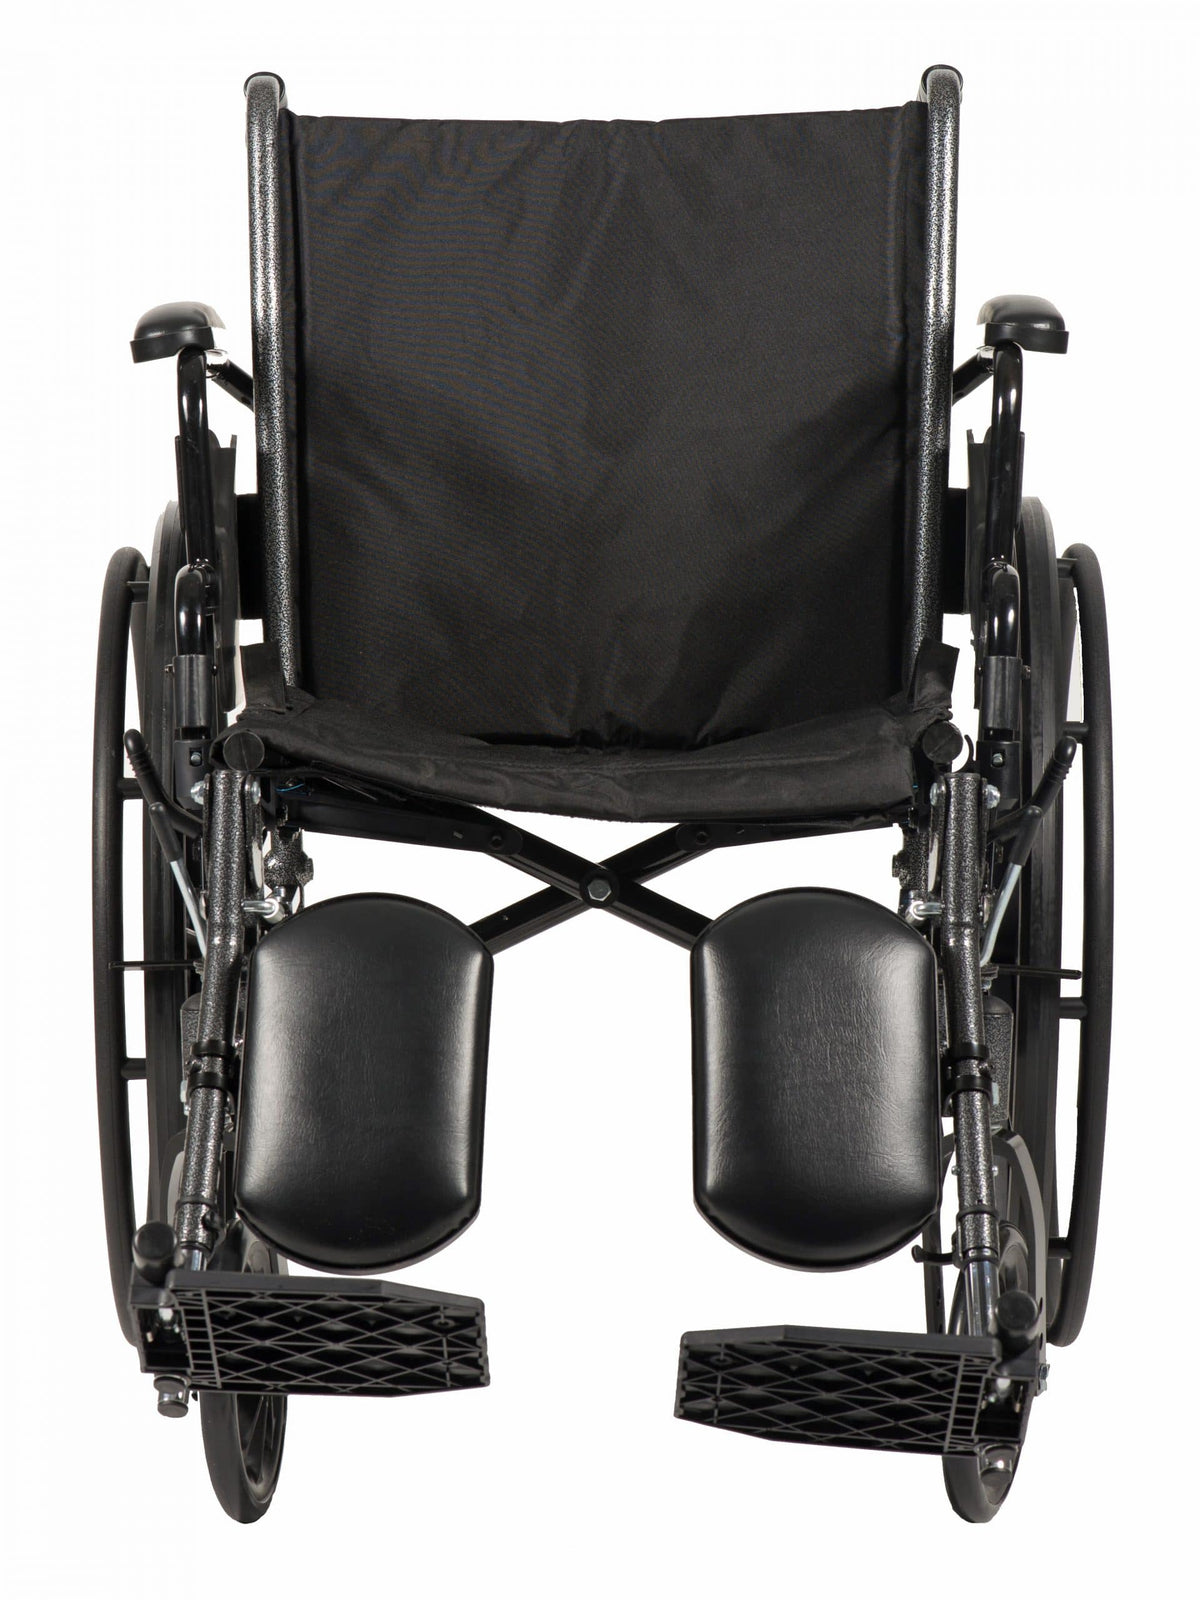 Buy DynaRide Series 3 Lite Wheelchairs from DMG Wellness